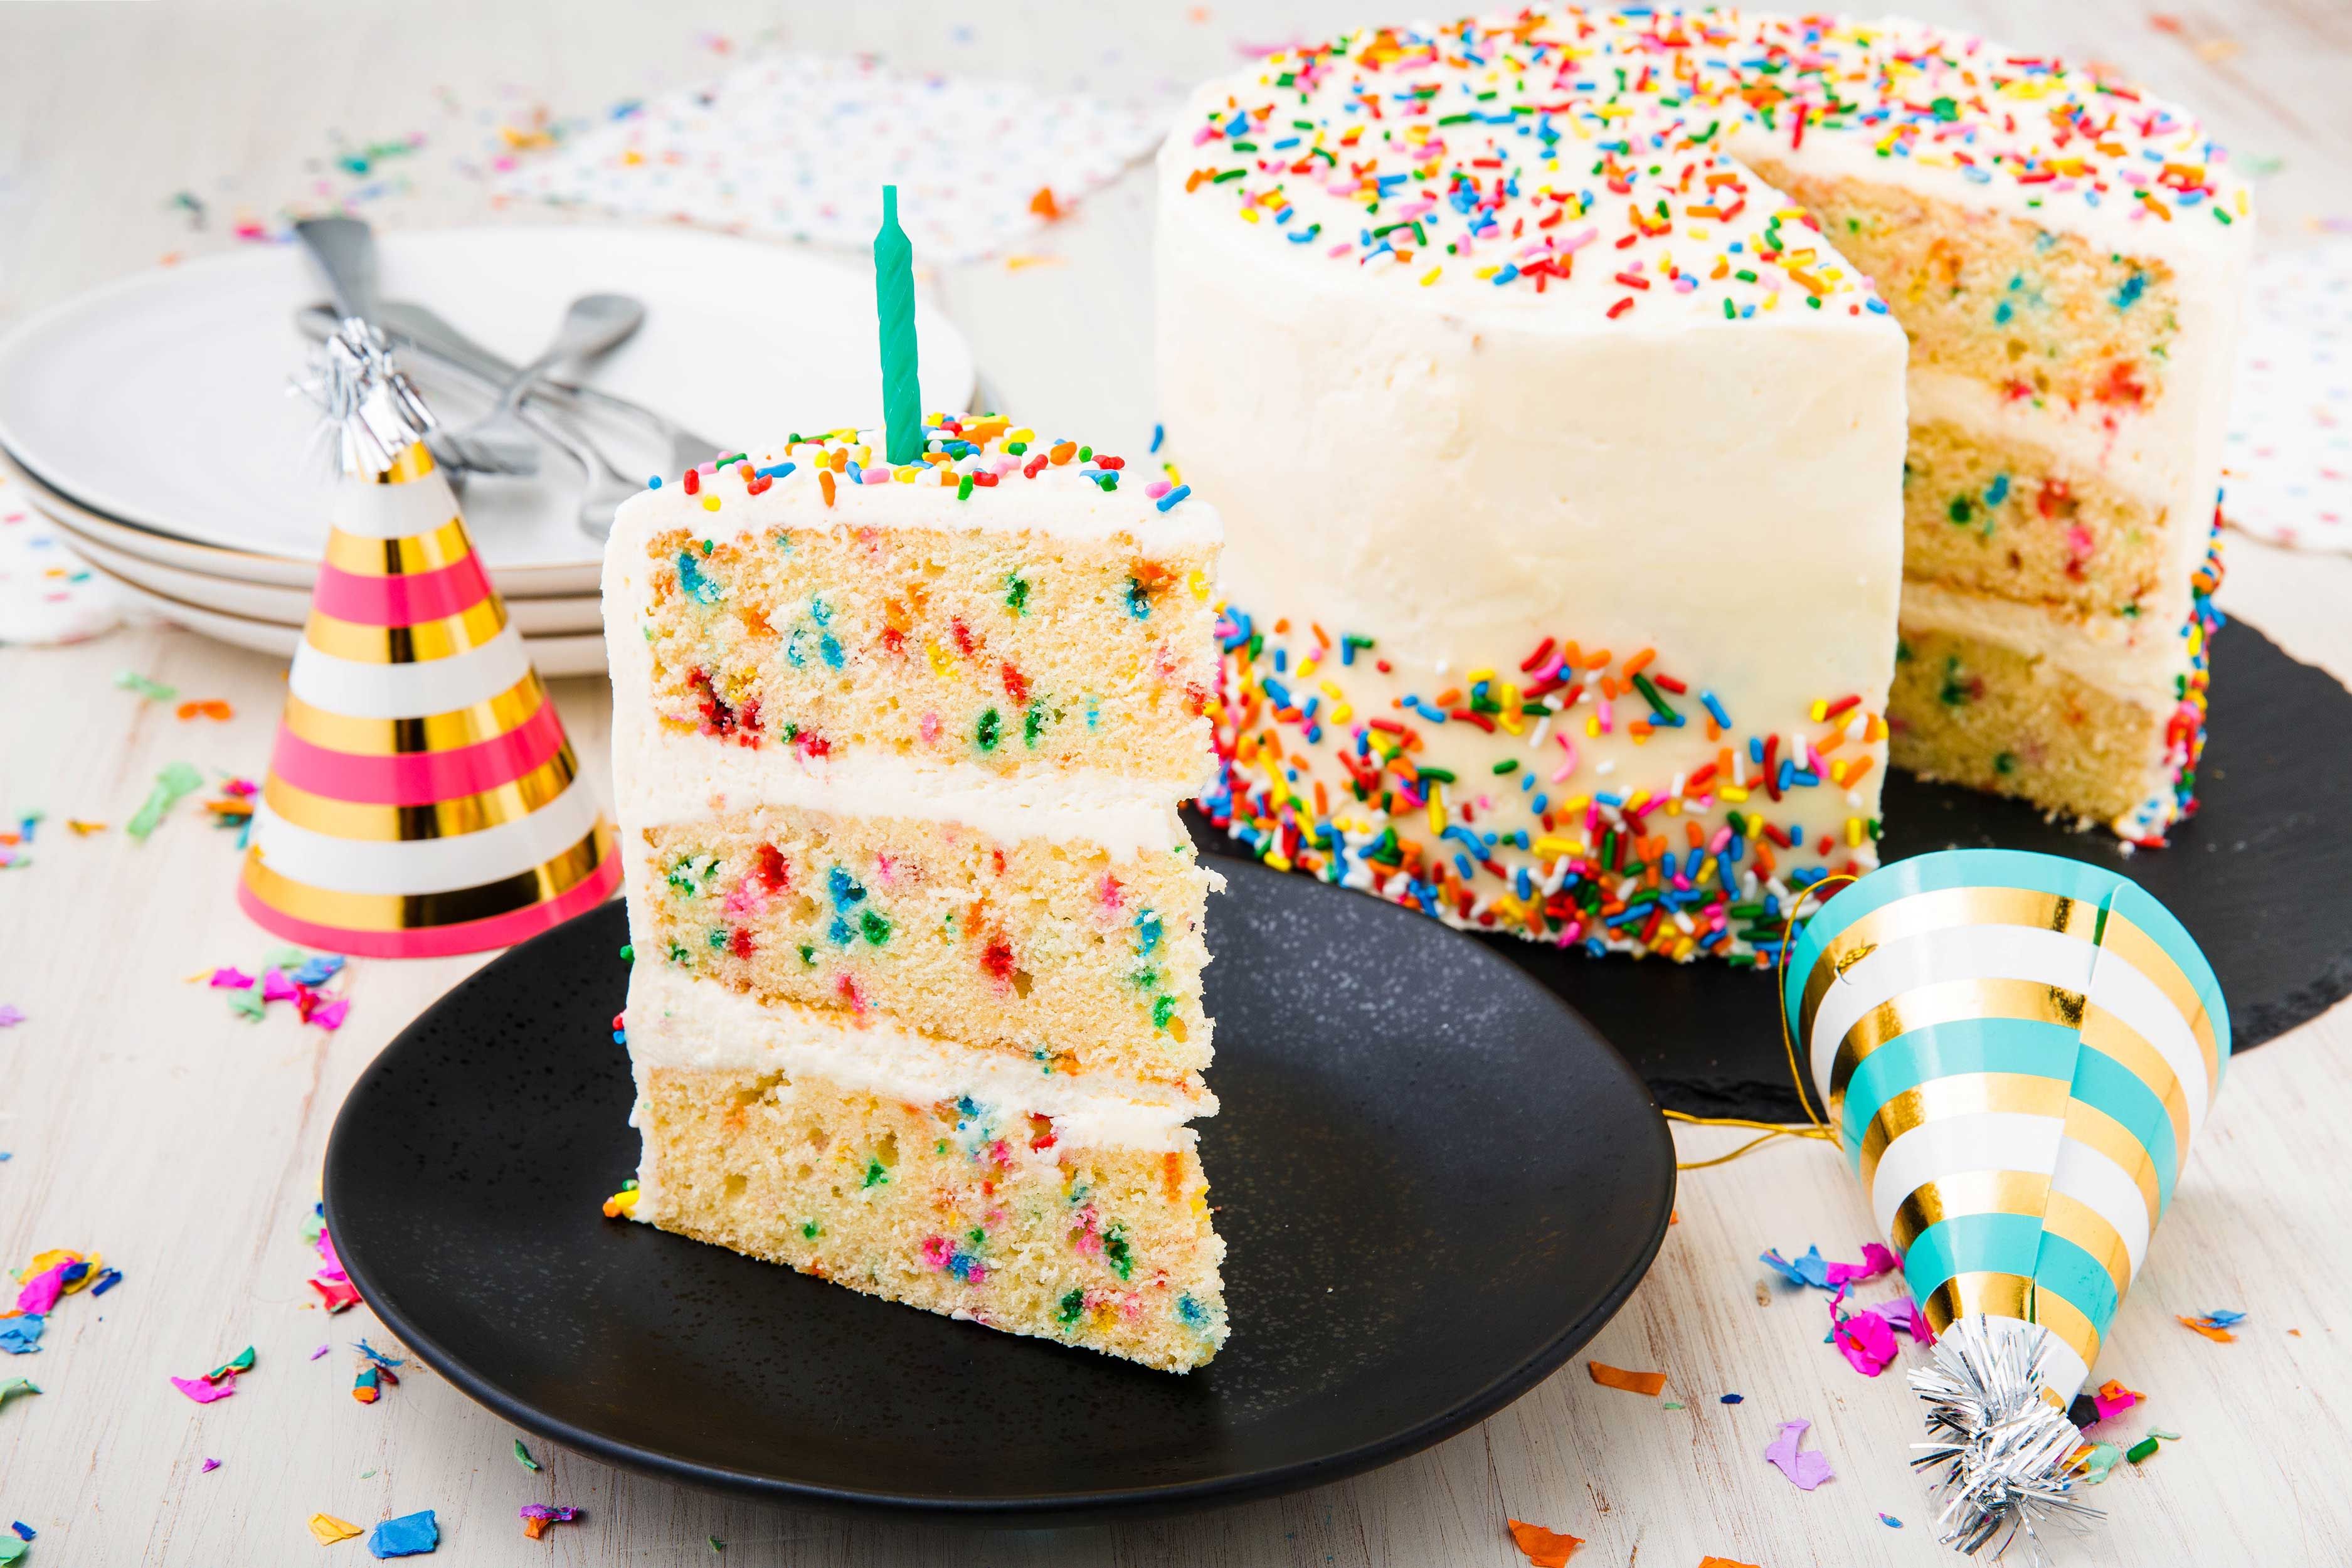 Best Confetti Cake Recipe - Homemade Funfetti Birthday Cake